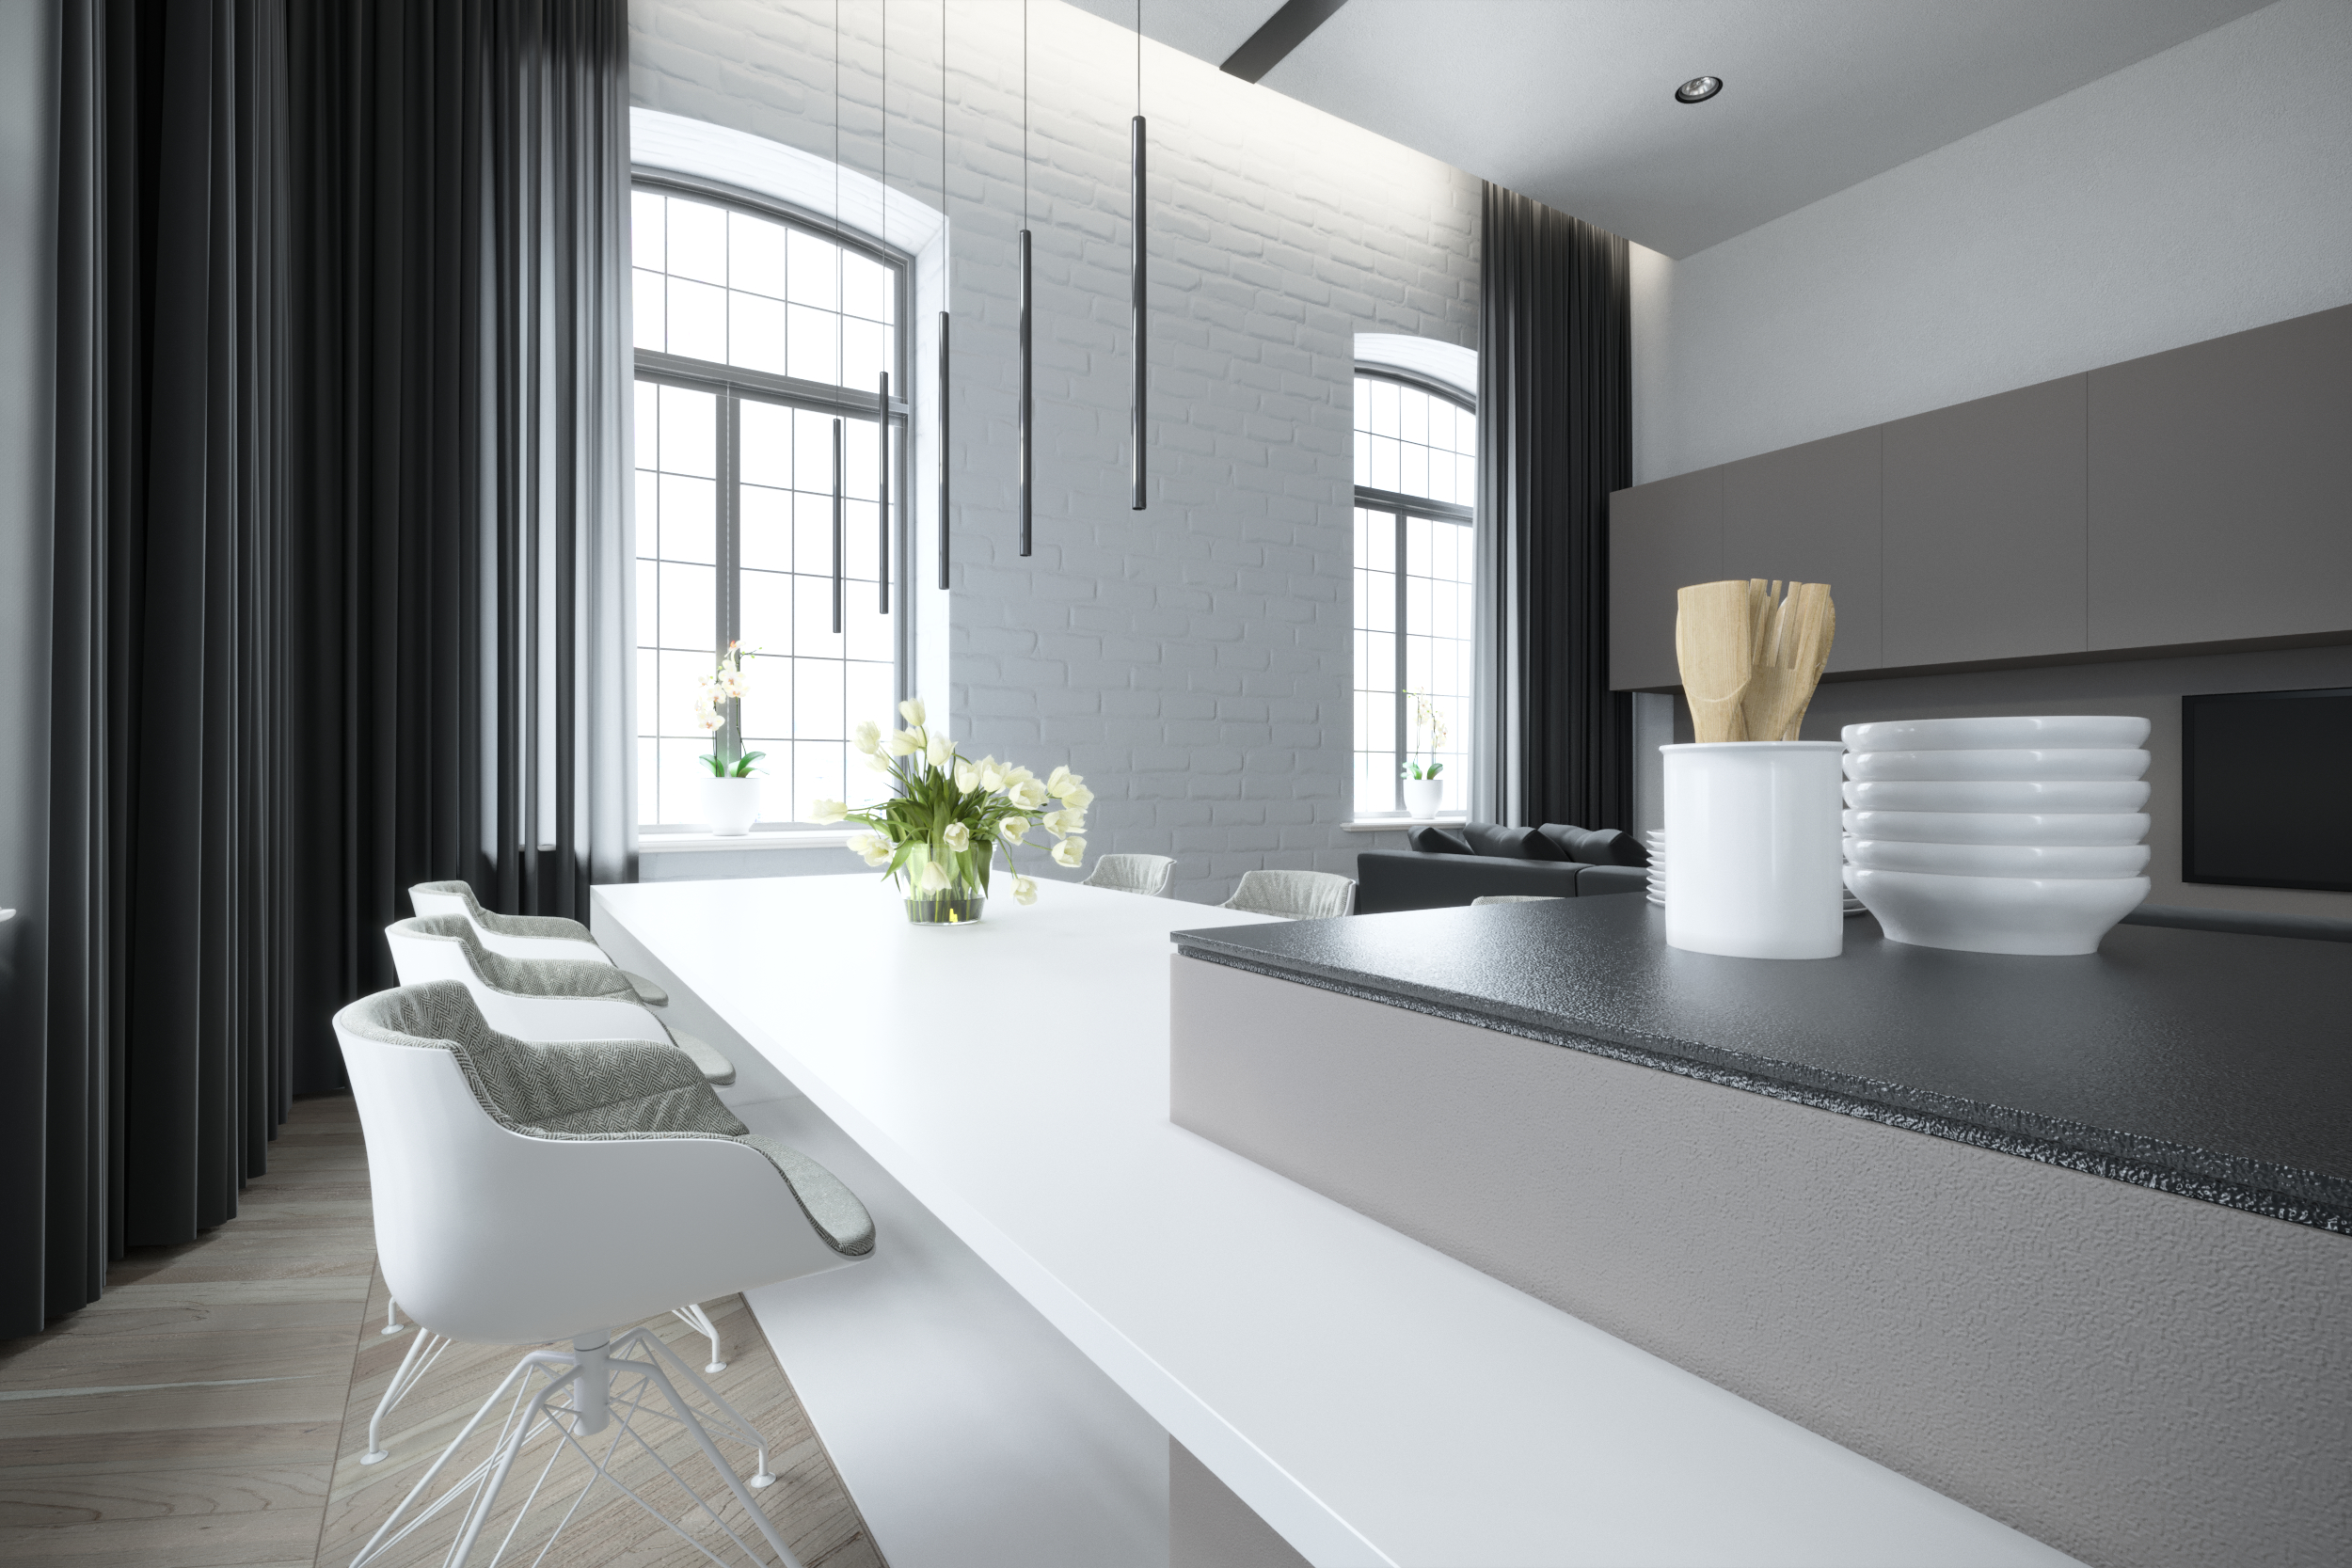 London Residential Property Development Loft Conversion Minimal Interior Design Inspiration Concept Visual by Unit4